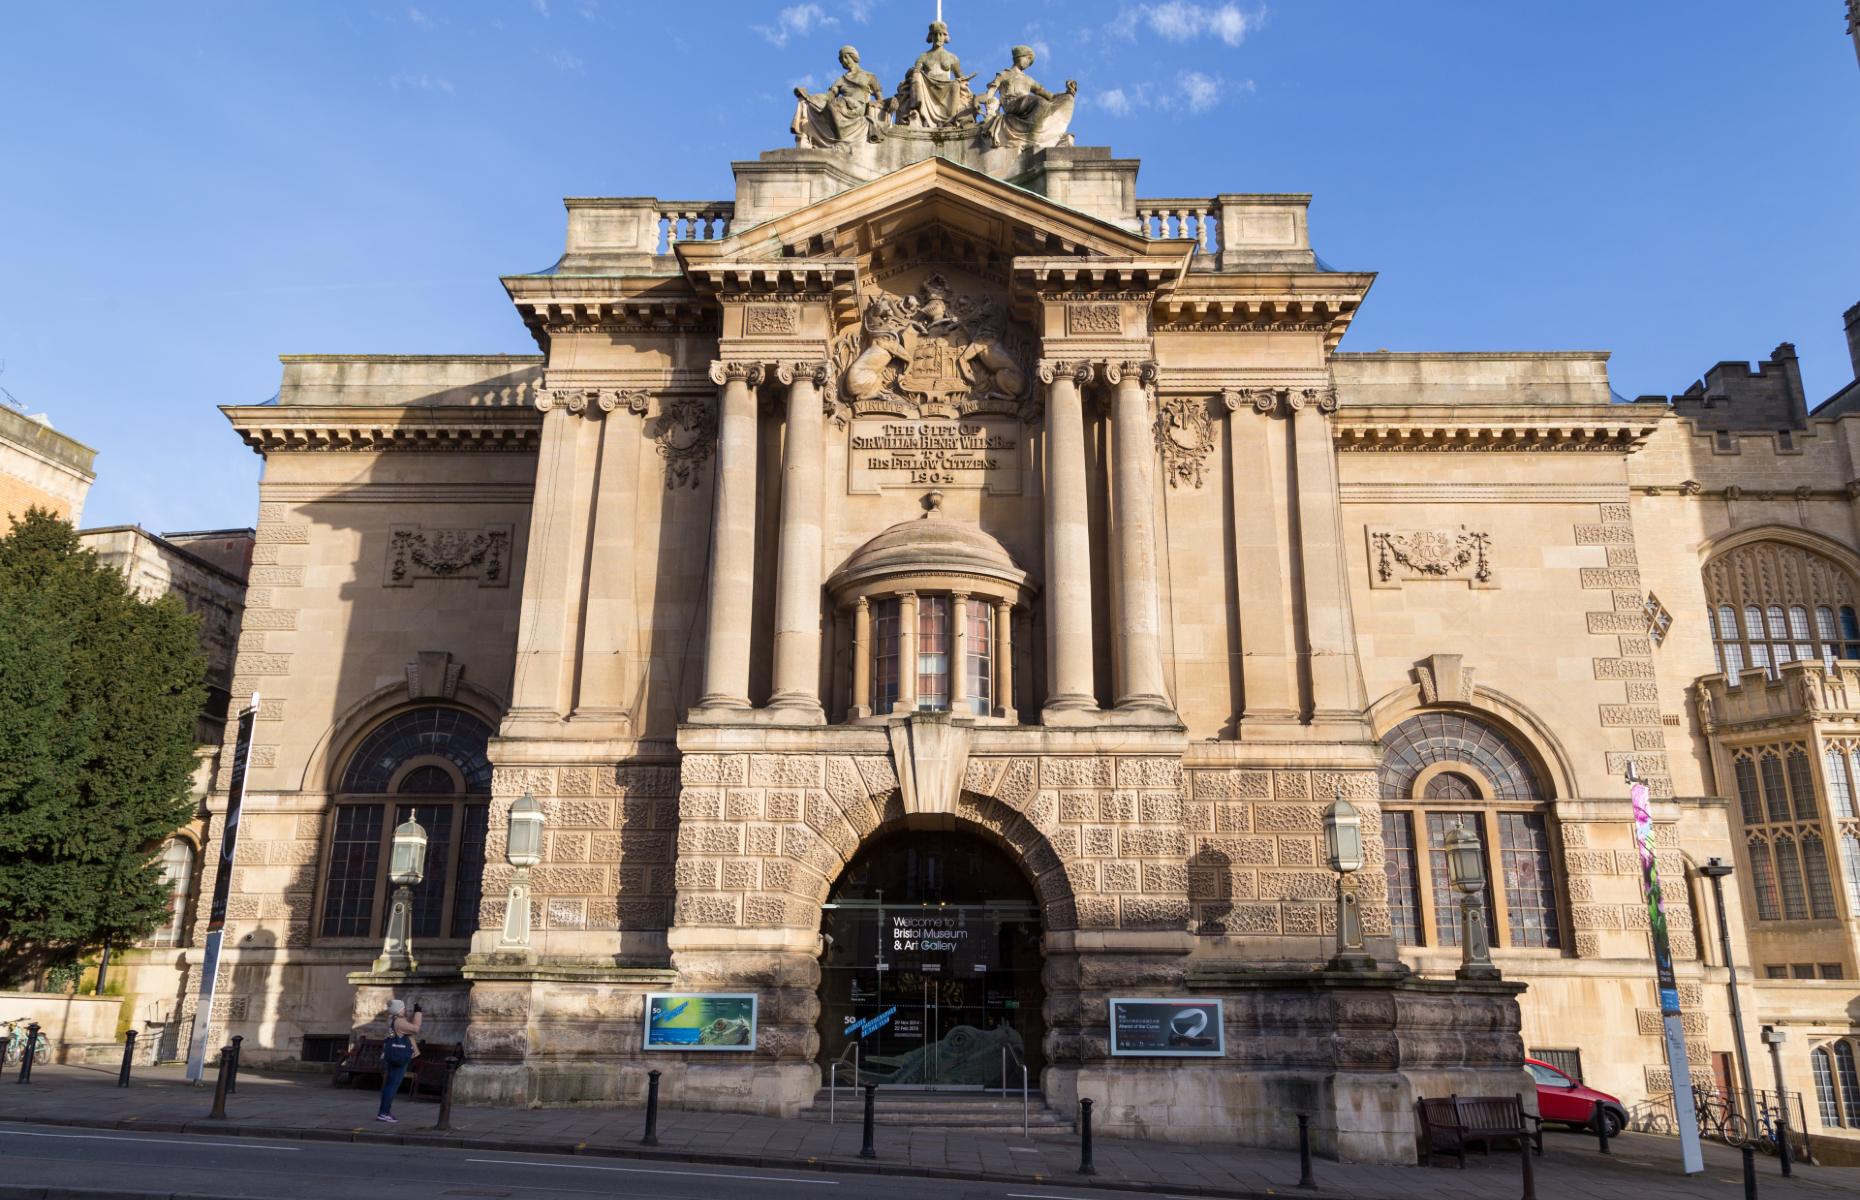 Bristol Museum & Art Gallery [Image: Casper Farrell/Shutterstock]